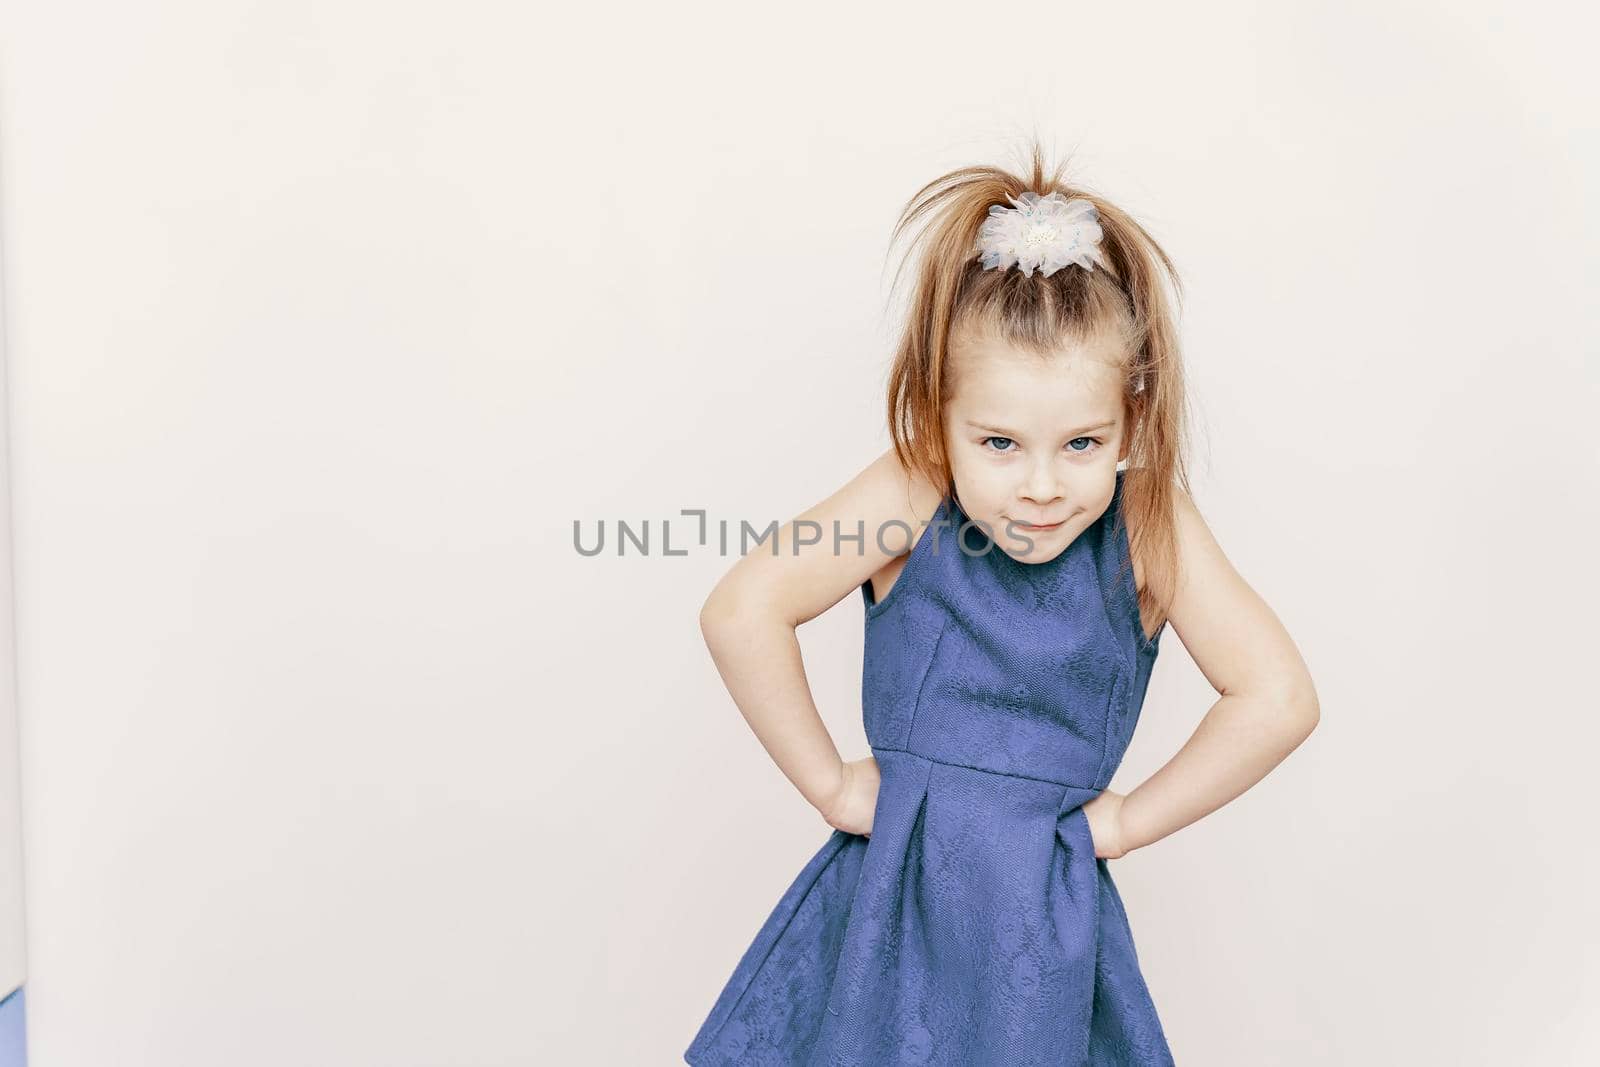 cute 5-6 year old girl in a blue dress posing in the studio by Lena_Ogurtsova